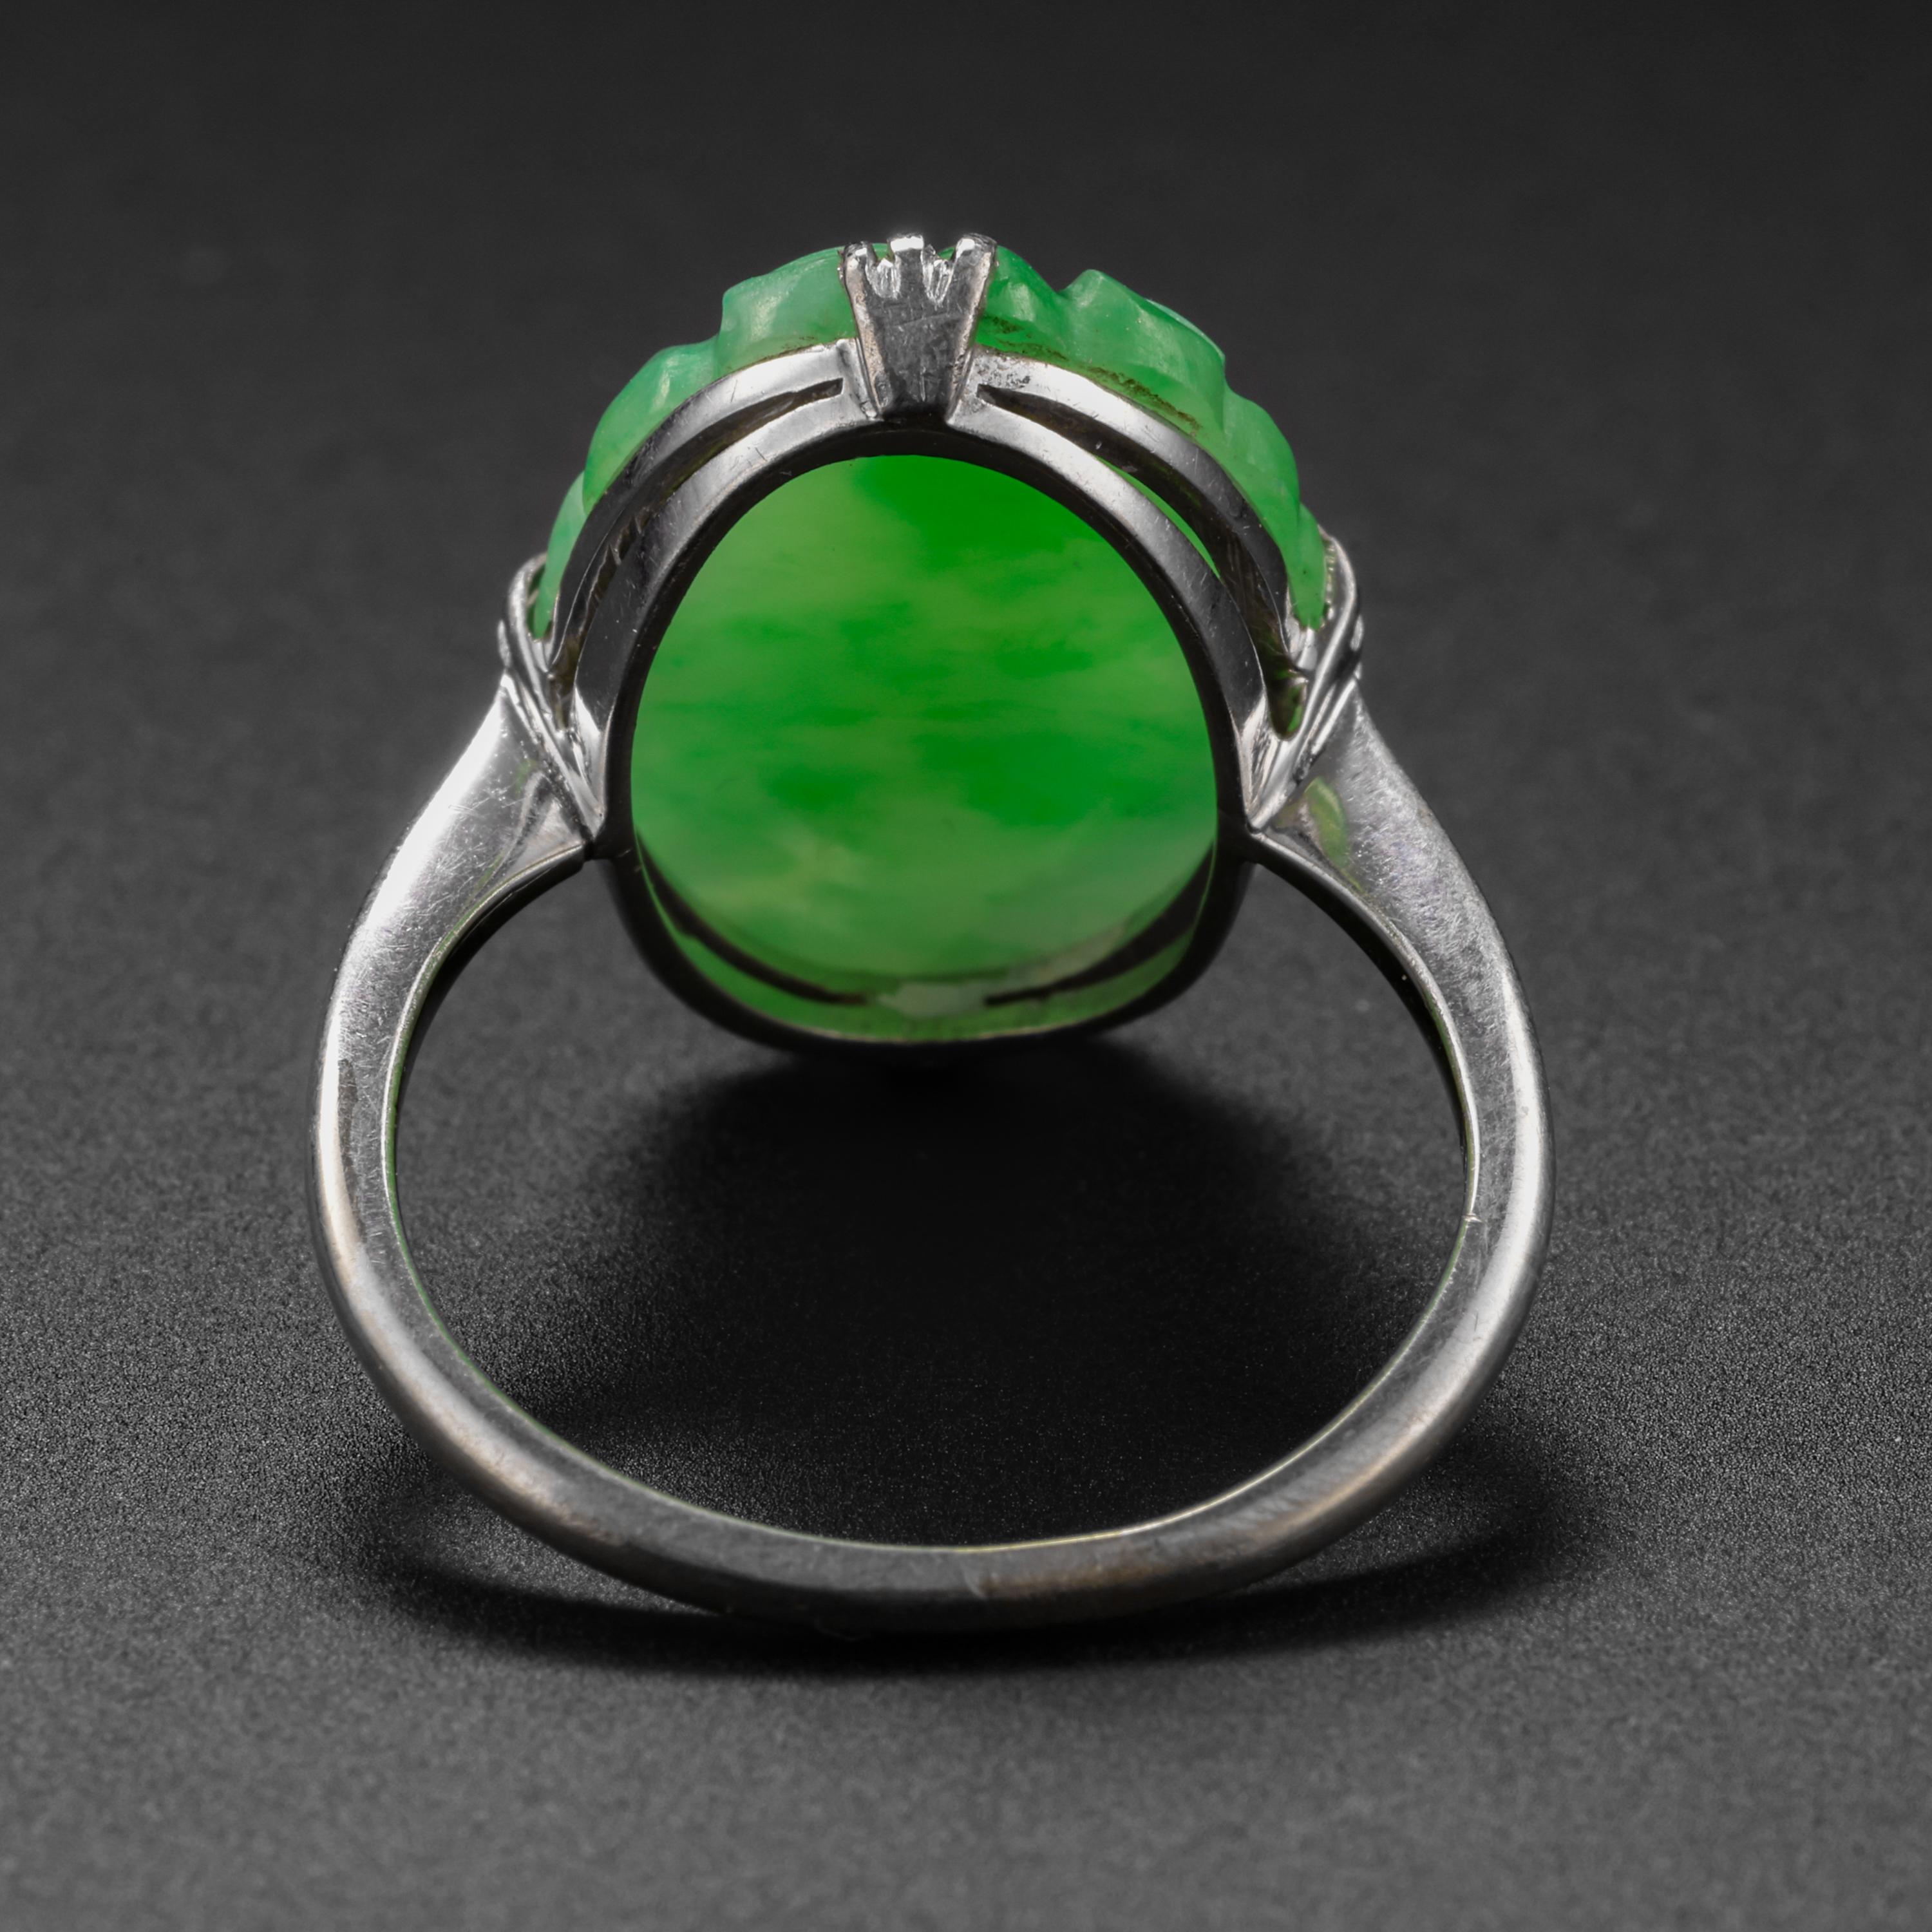 Oval Cut Jade Ring Certified Untreated Spectacular Apple Green Art Deco Treasure